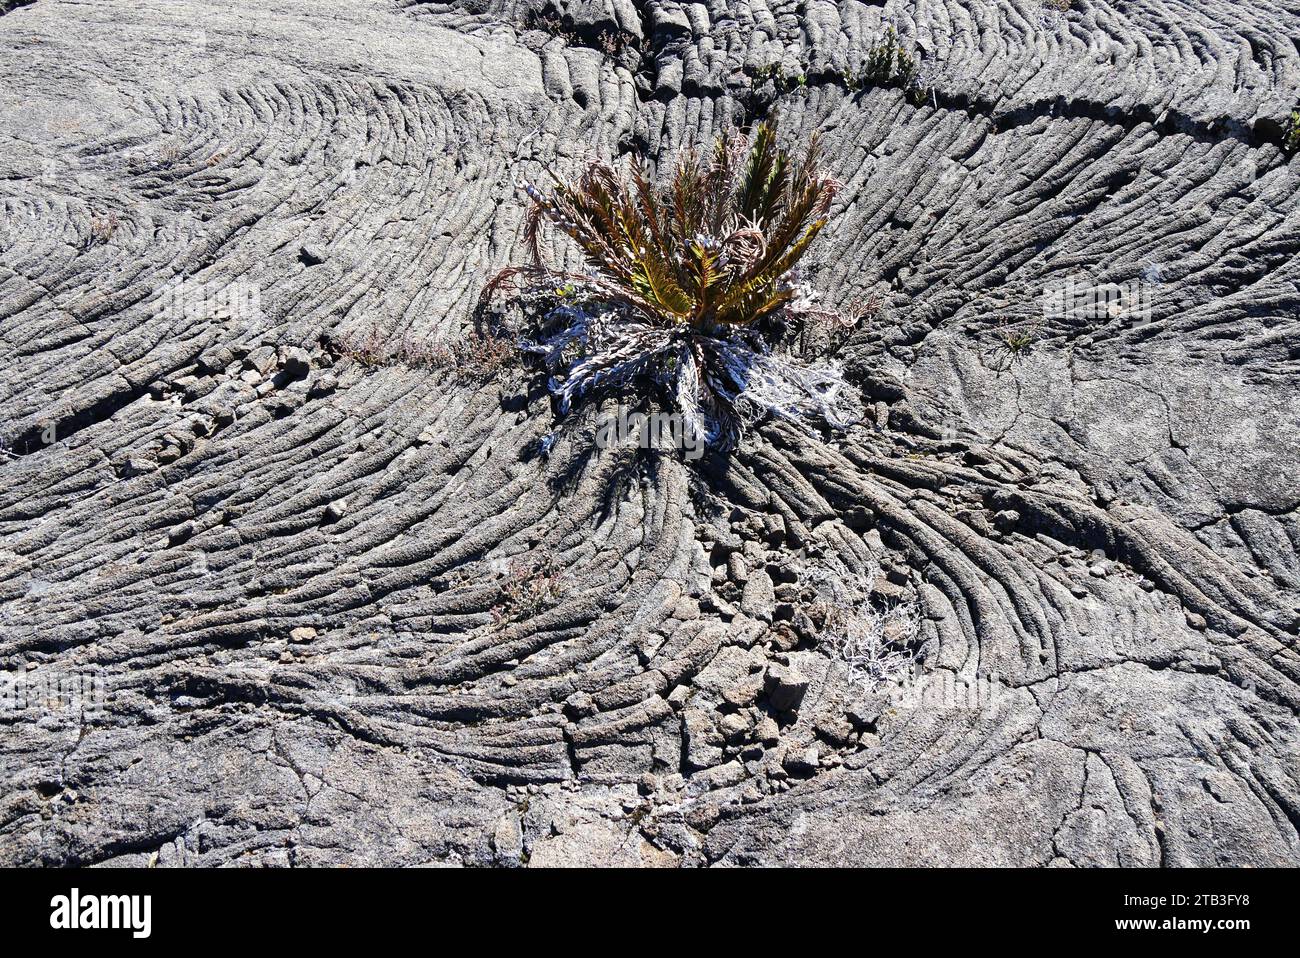 Blechnum fern growing in the center of pahoehoe lava flows rocks in Piton de la Fournaise, Reunion Stock Photo